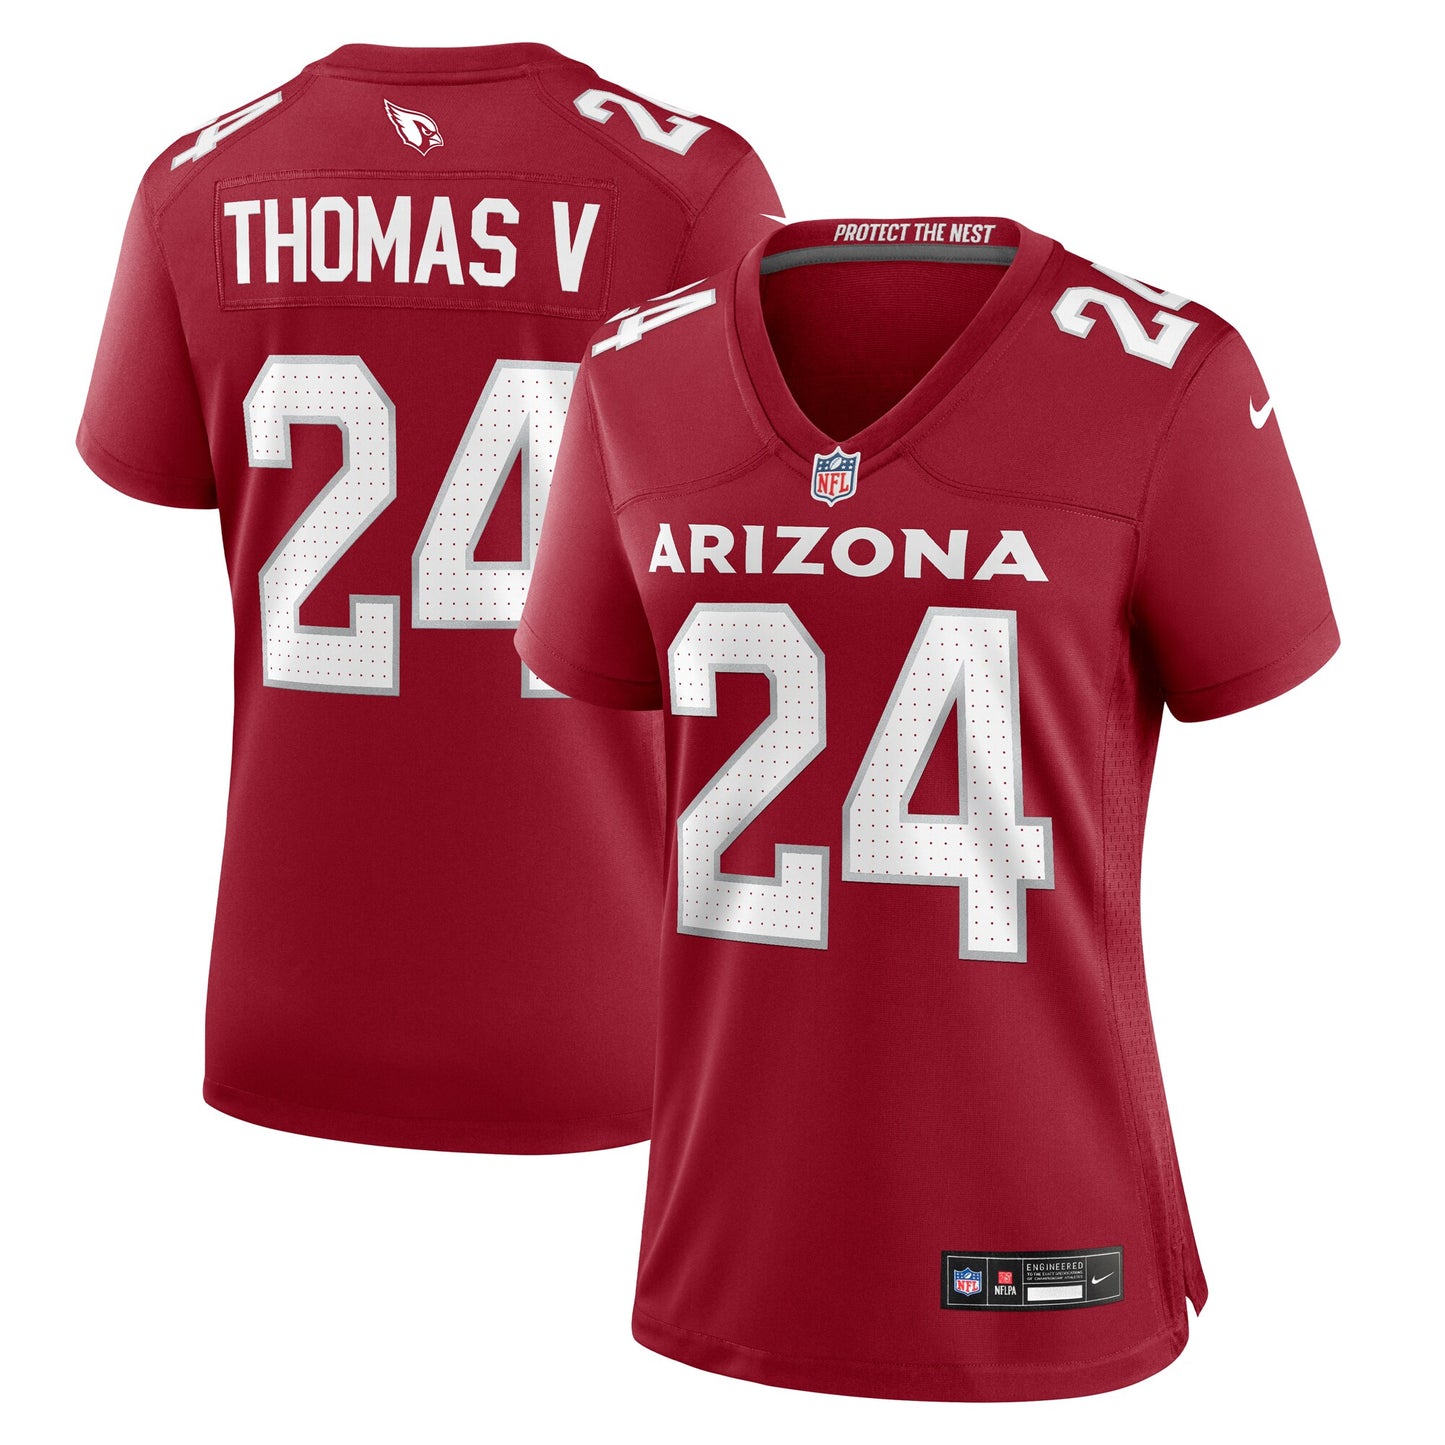 Starling Thomas V Arizona Cardinals Nike Women's Team Game Jersey -  Cardinal